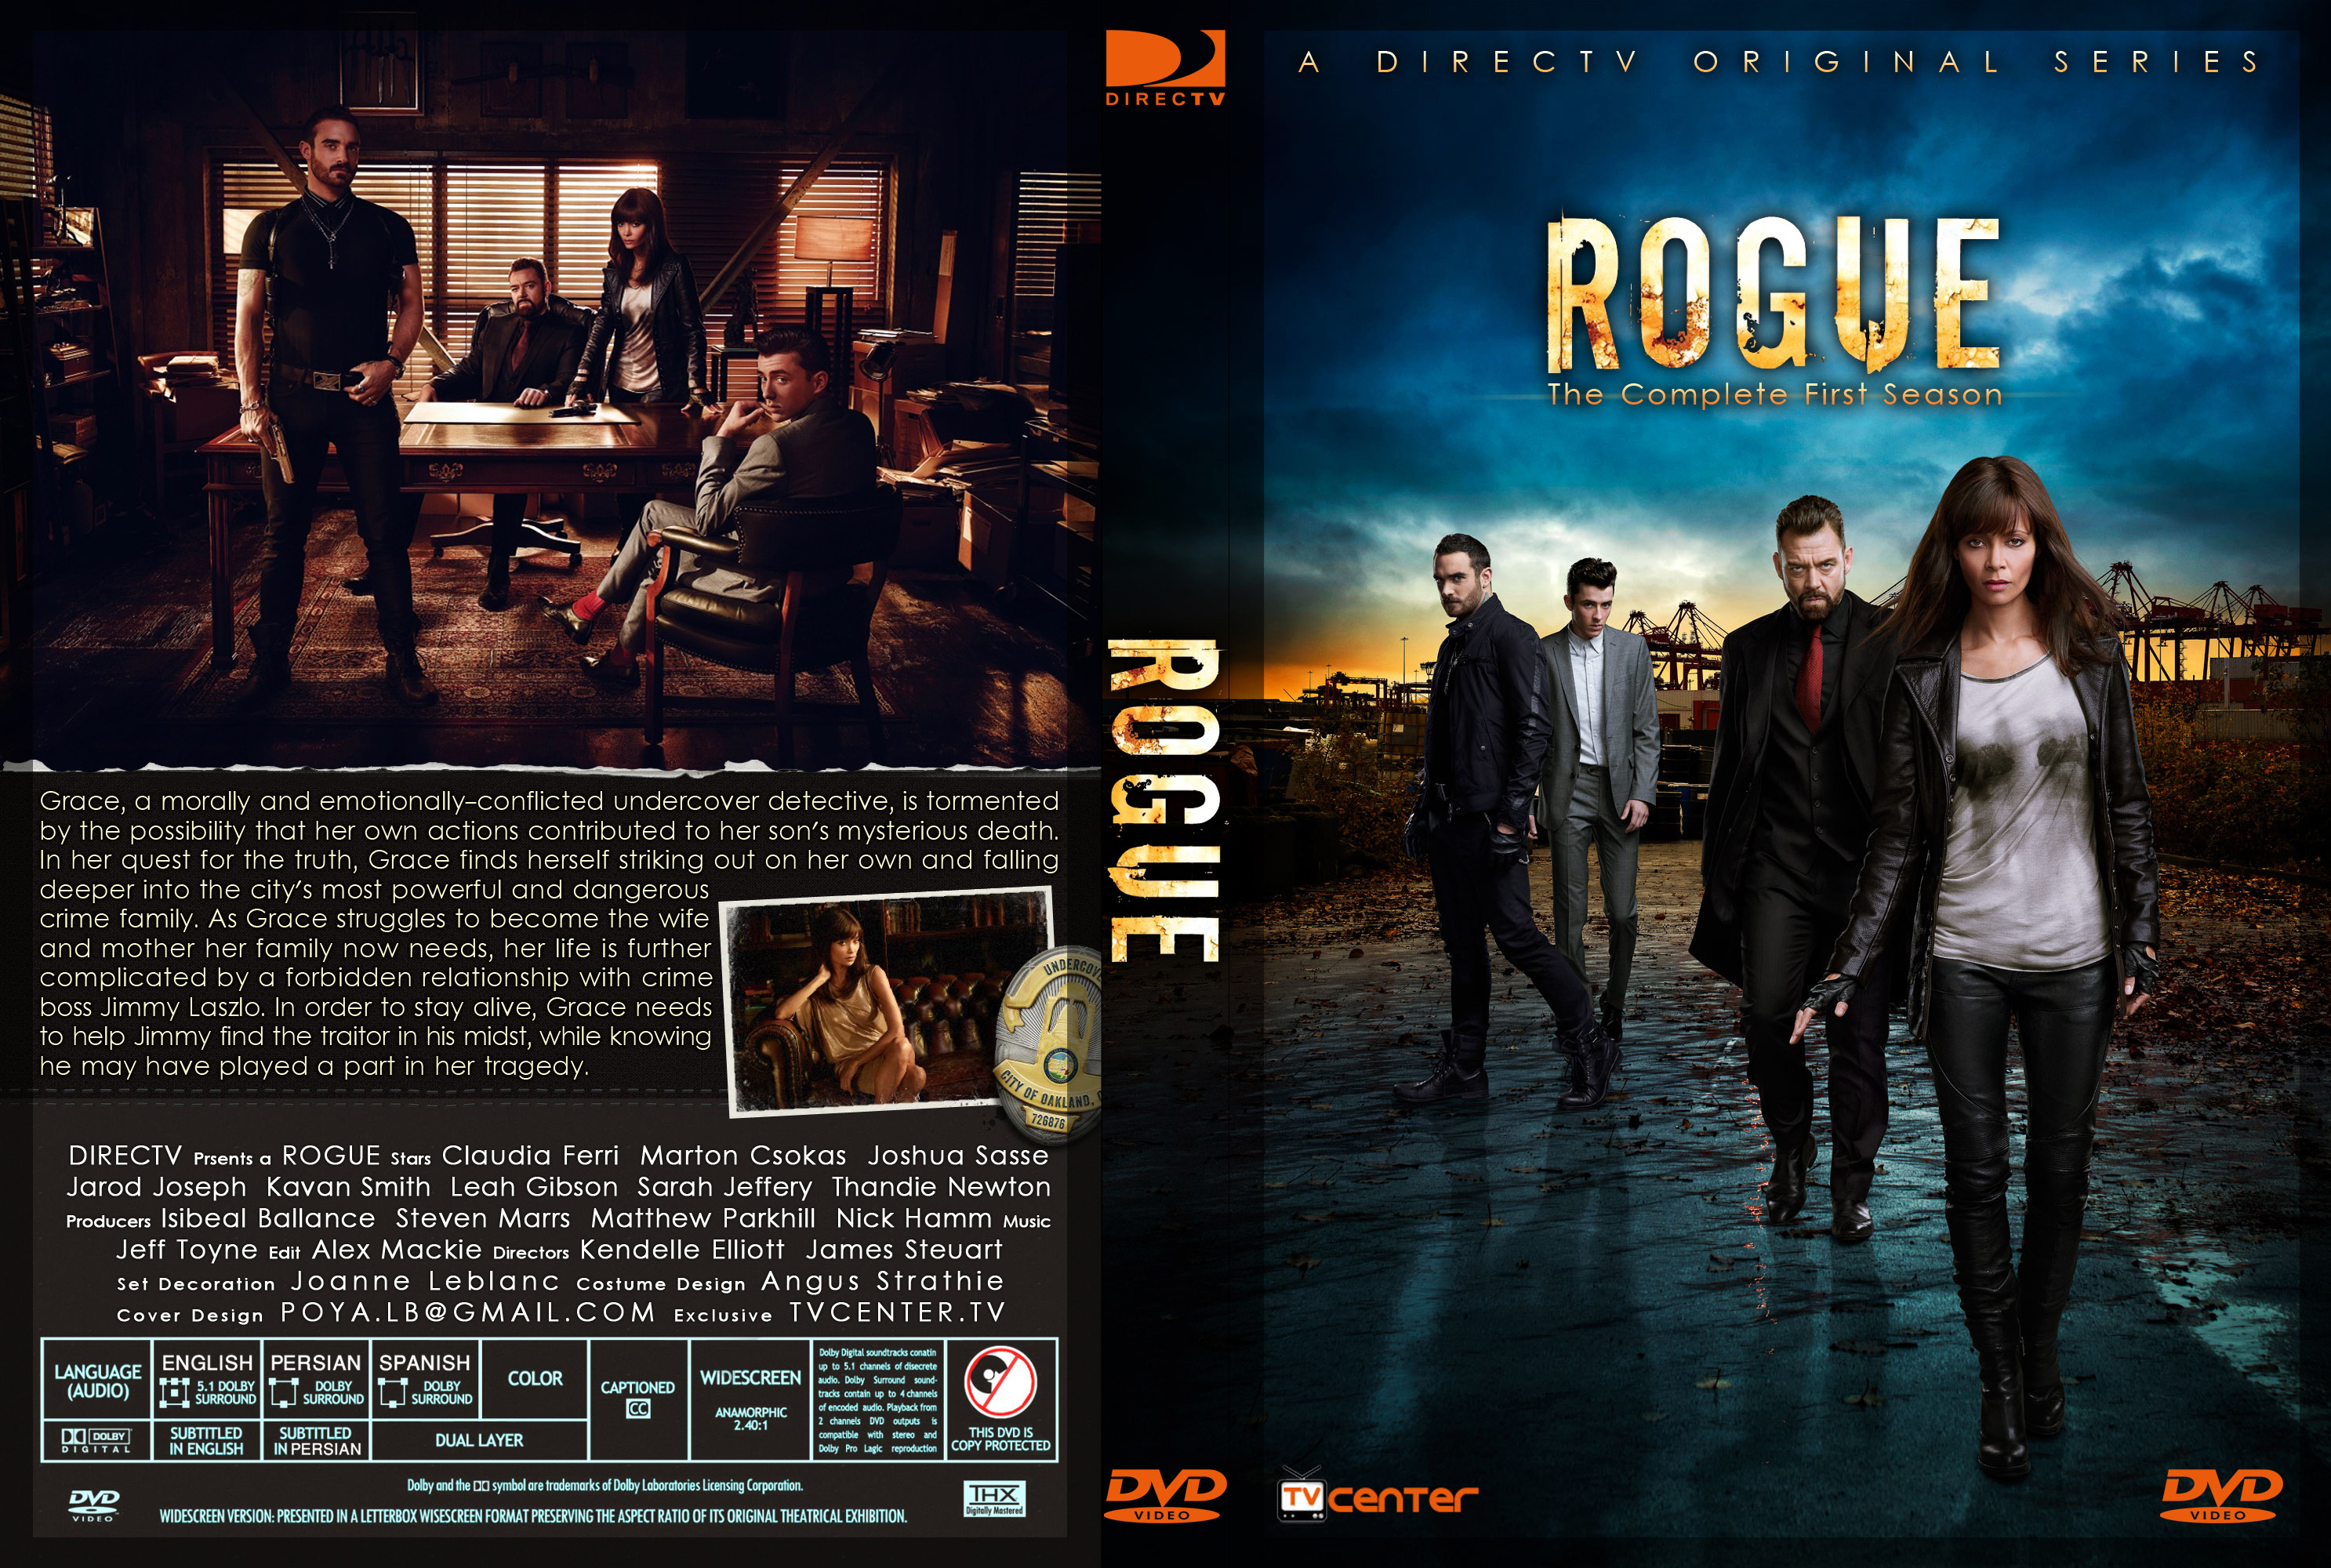 Rogue Hunter R2 DE DVD Cover 